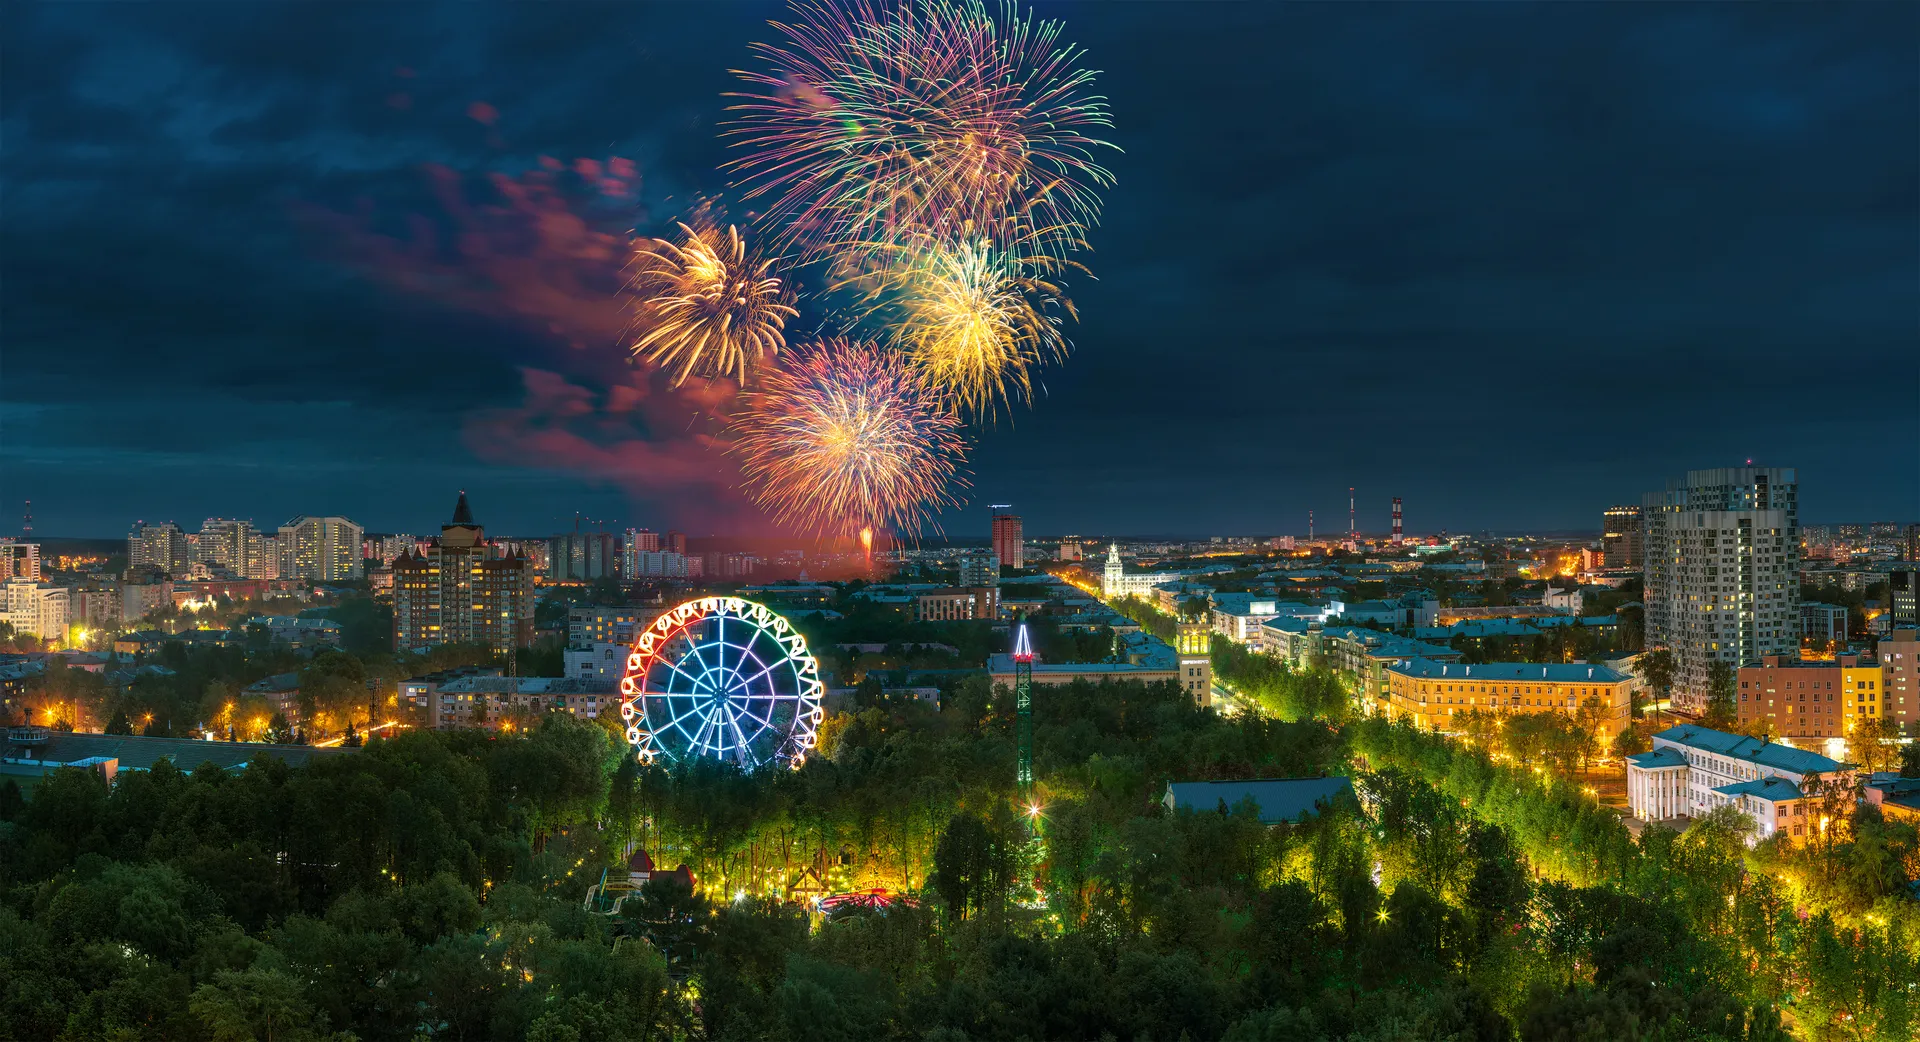 Вид на колесо обозрения в парке им. Горького / A view of the Ferris wheel in the Gorky Park